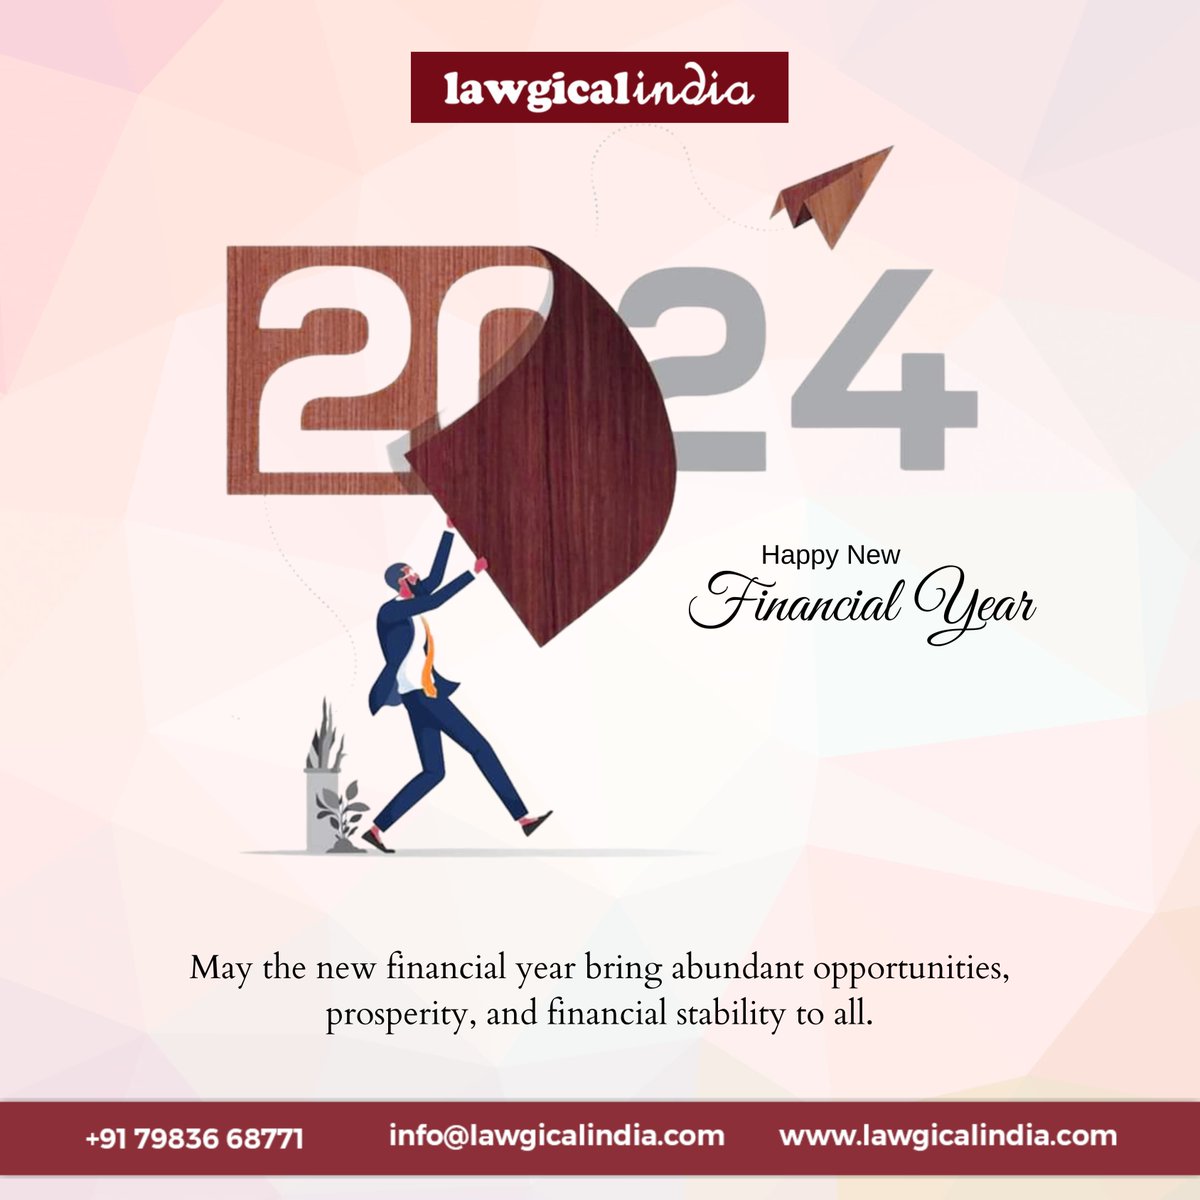 Fresh start, fresh mindset. Here's to a prosperous financial year ahead! 🌟

#NewBeginnings #FinancialGoals #lawgicalindia #financialyear #april #newyear #prosperous #opportunities #financialstability